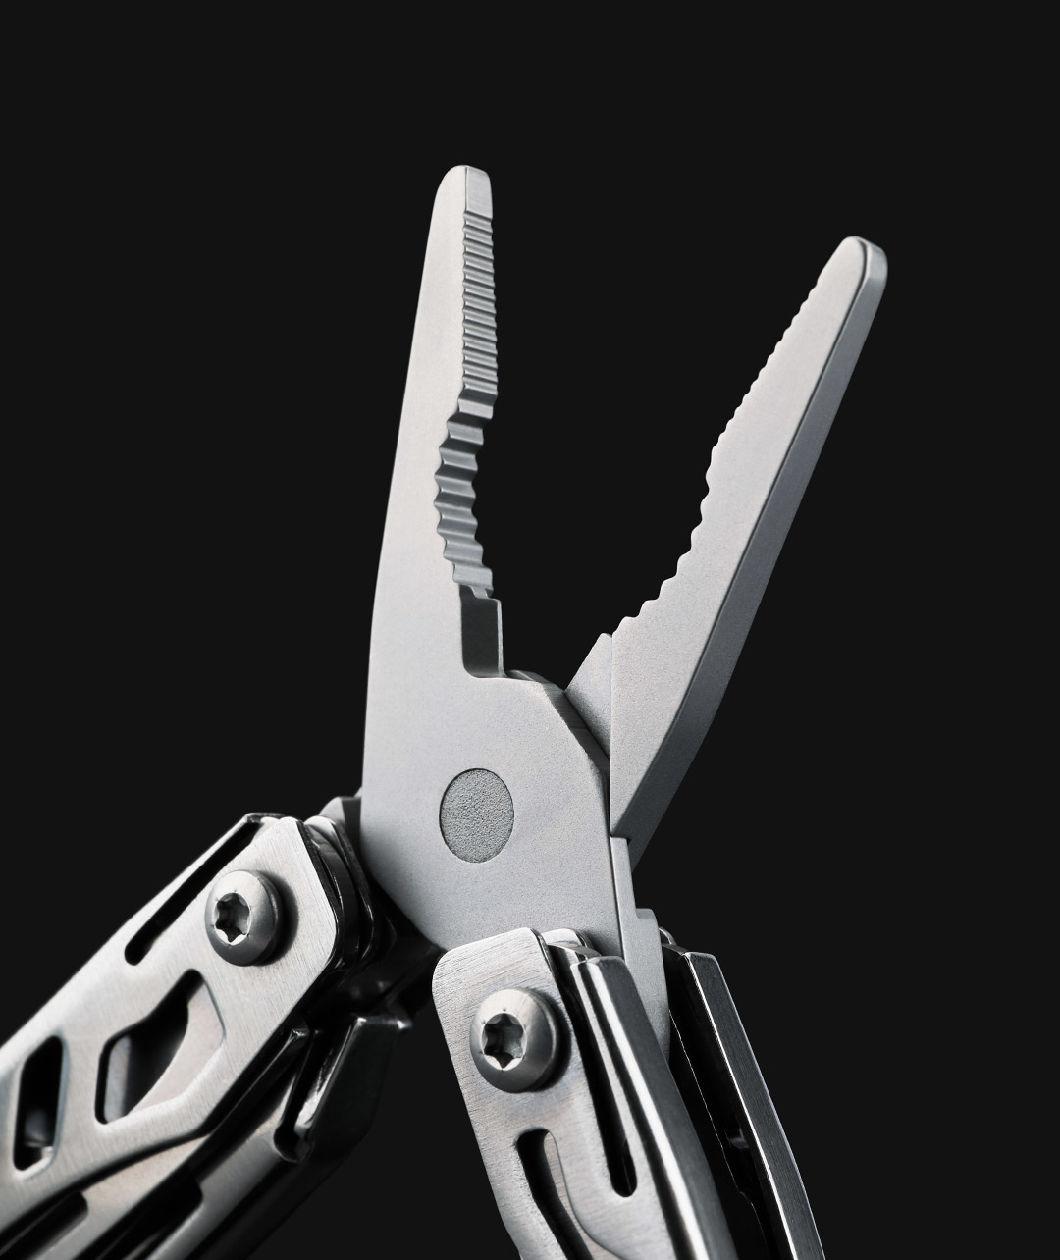 Nextool Stainless Steel Mini Multi Tool with Pliers Knife Saw